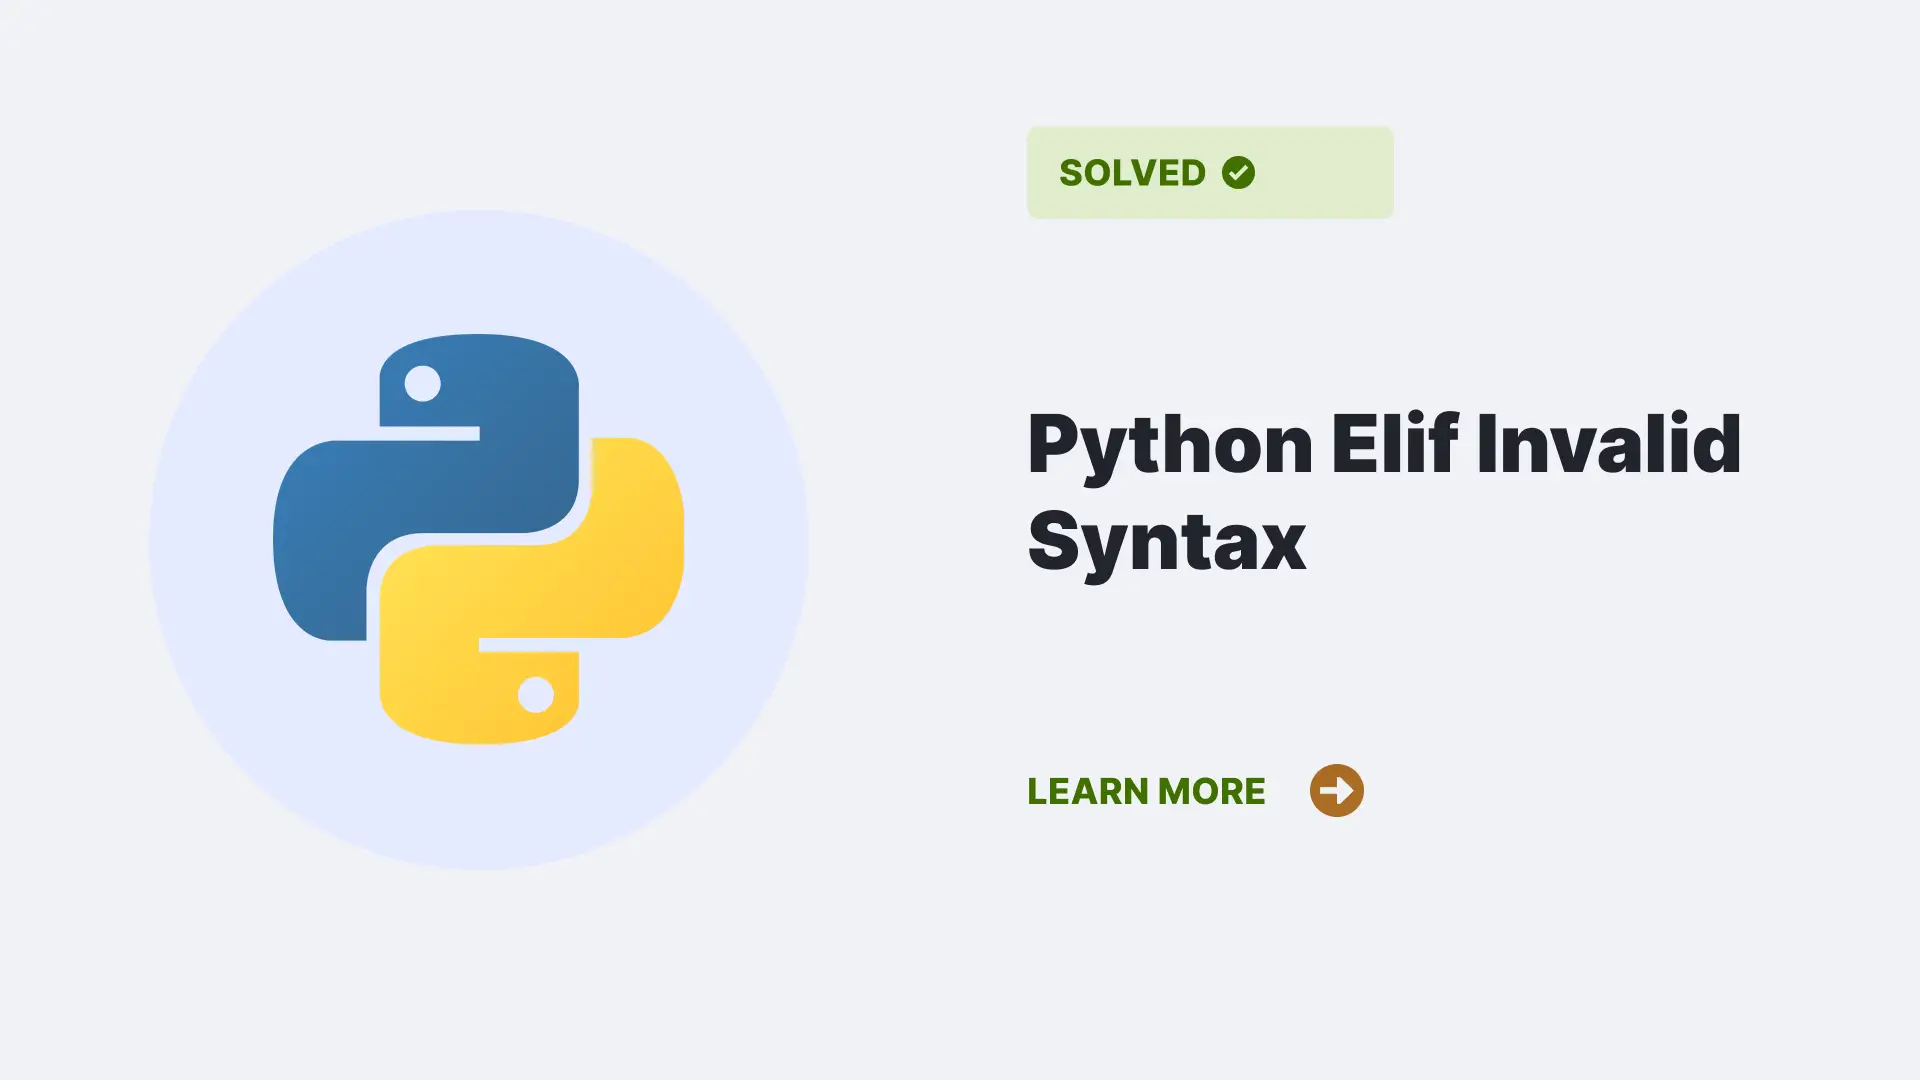 Python Elif Invalid Syntax